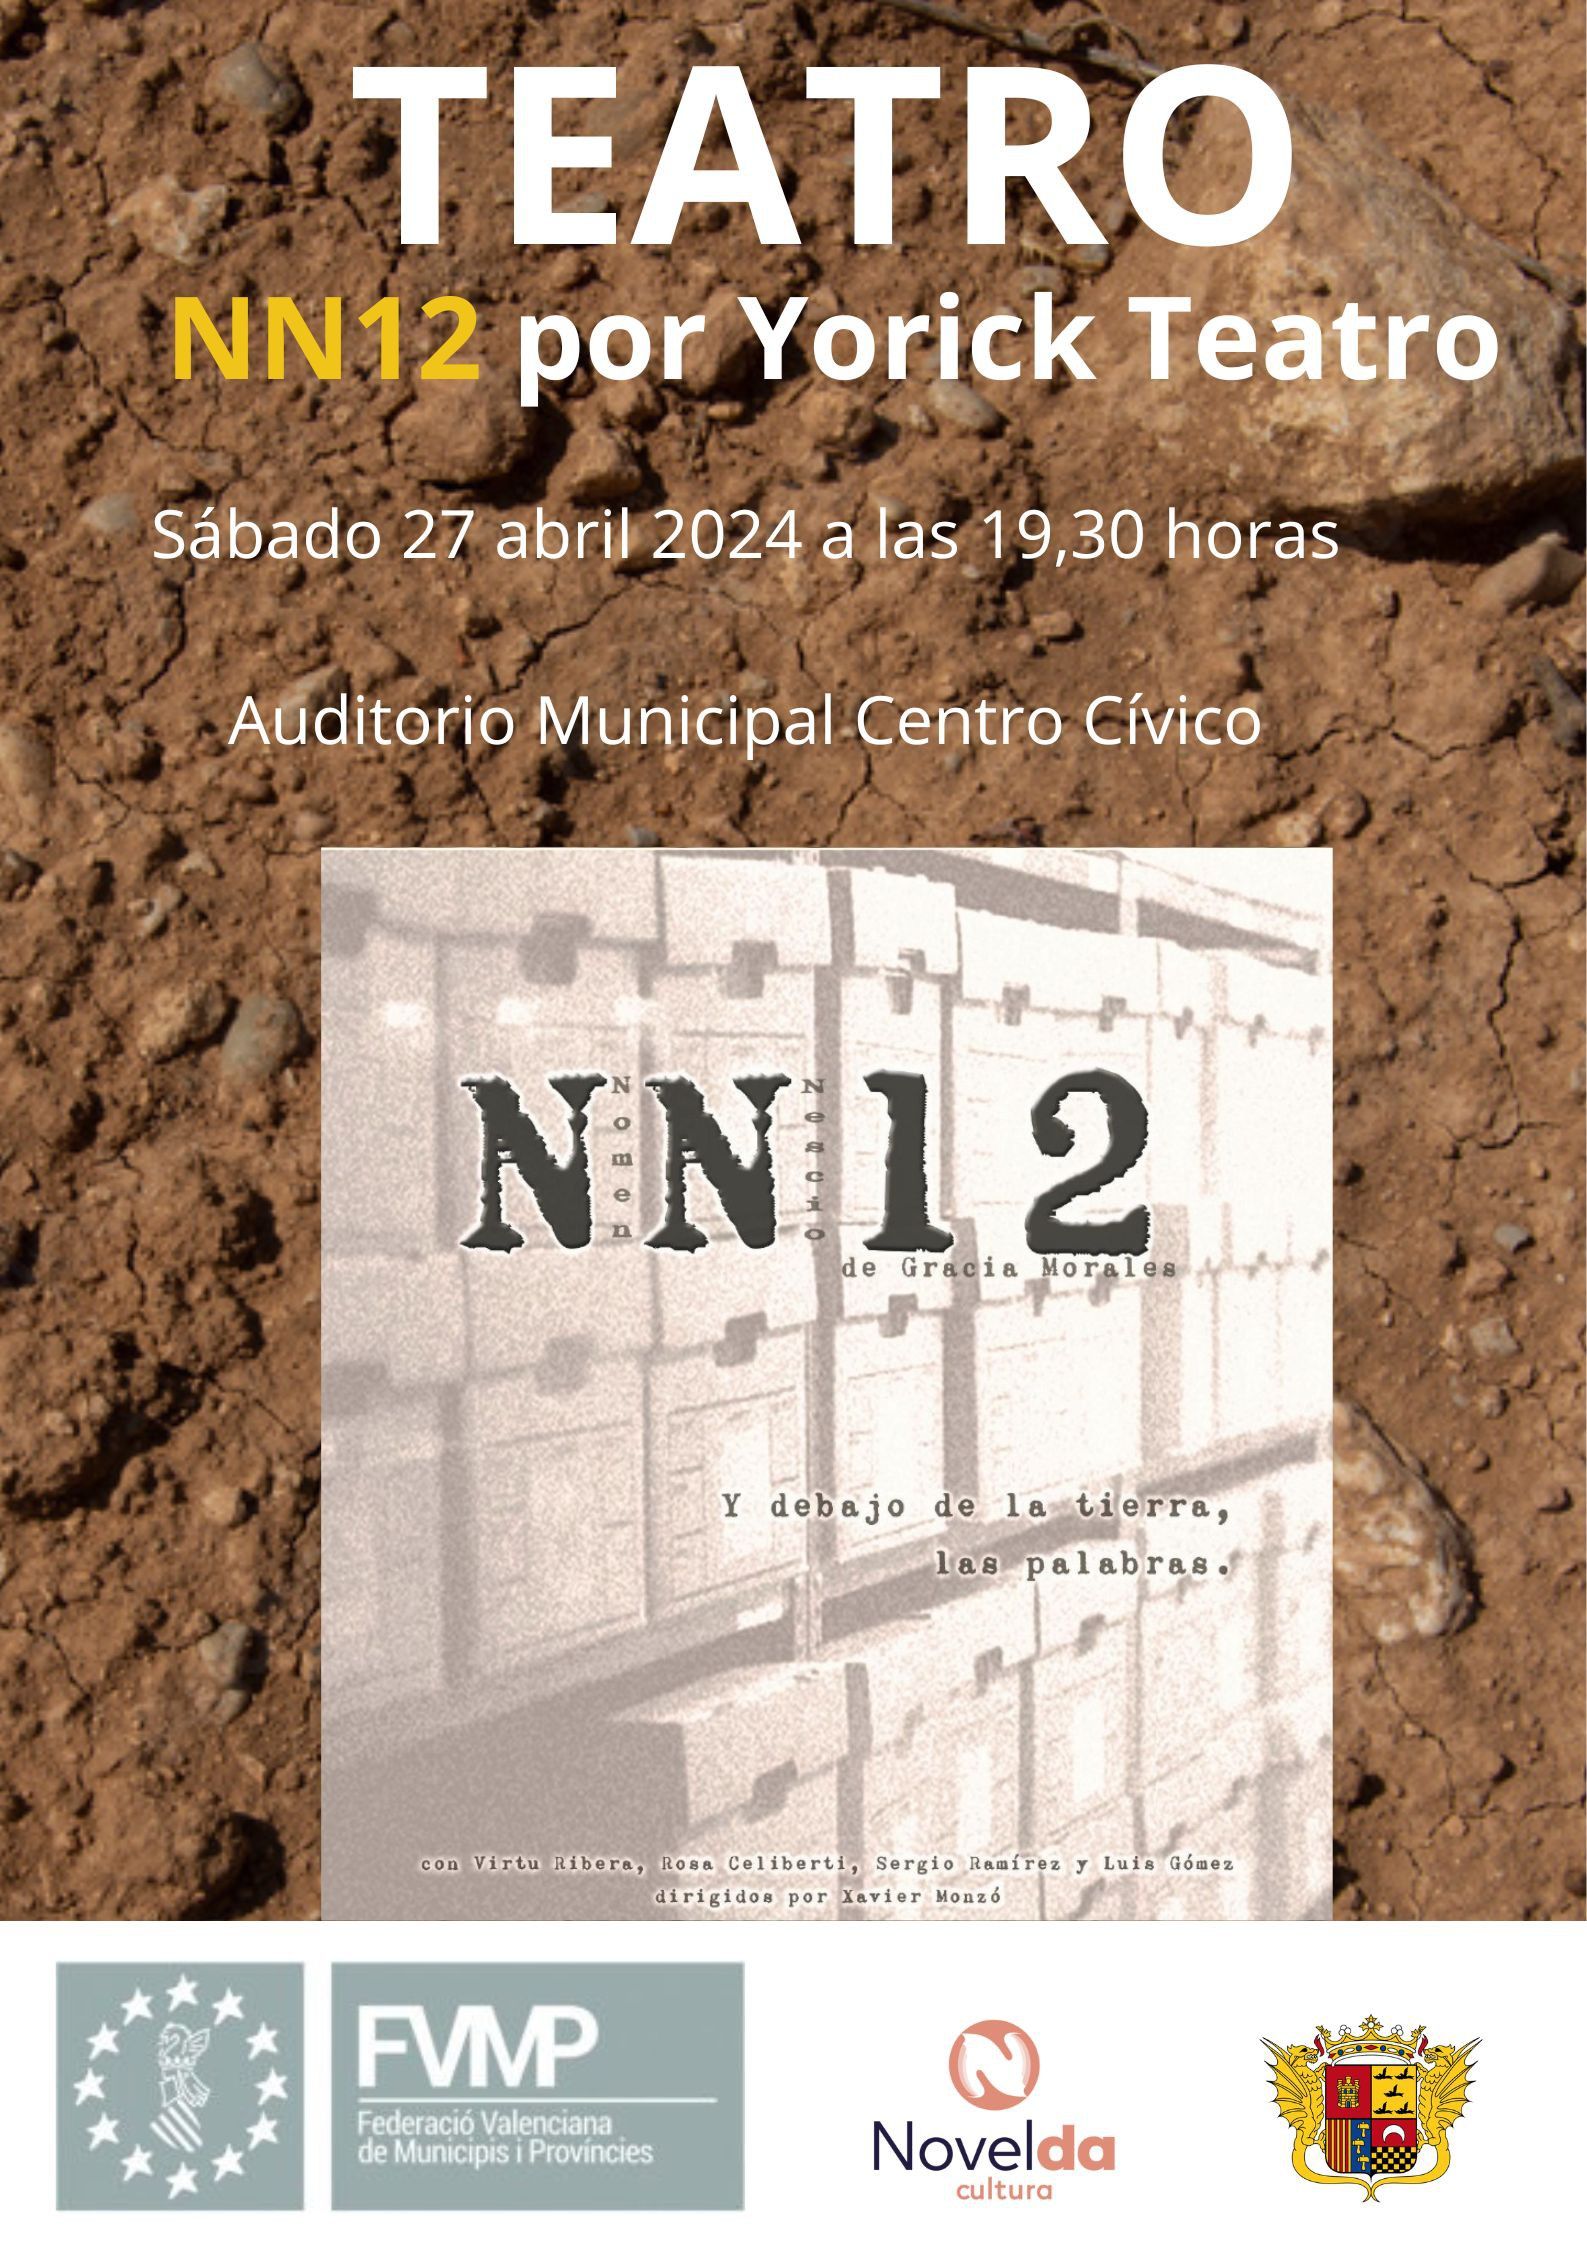 Ayuntamiento de Novelda Cartel-NN12-YORIK-TEATRO Teatre "NN12" 